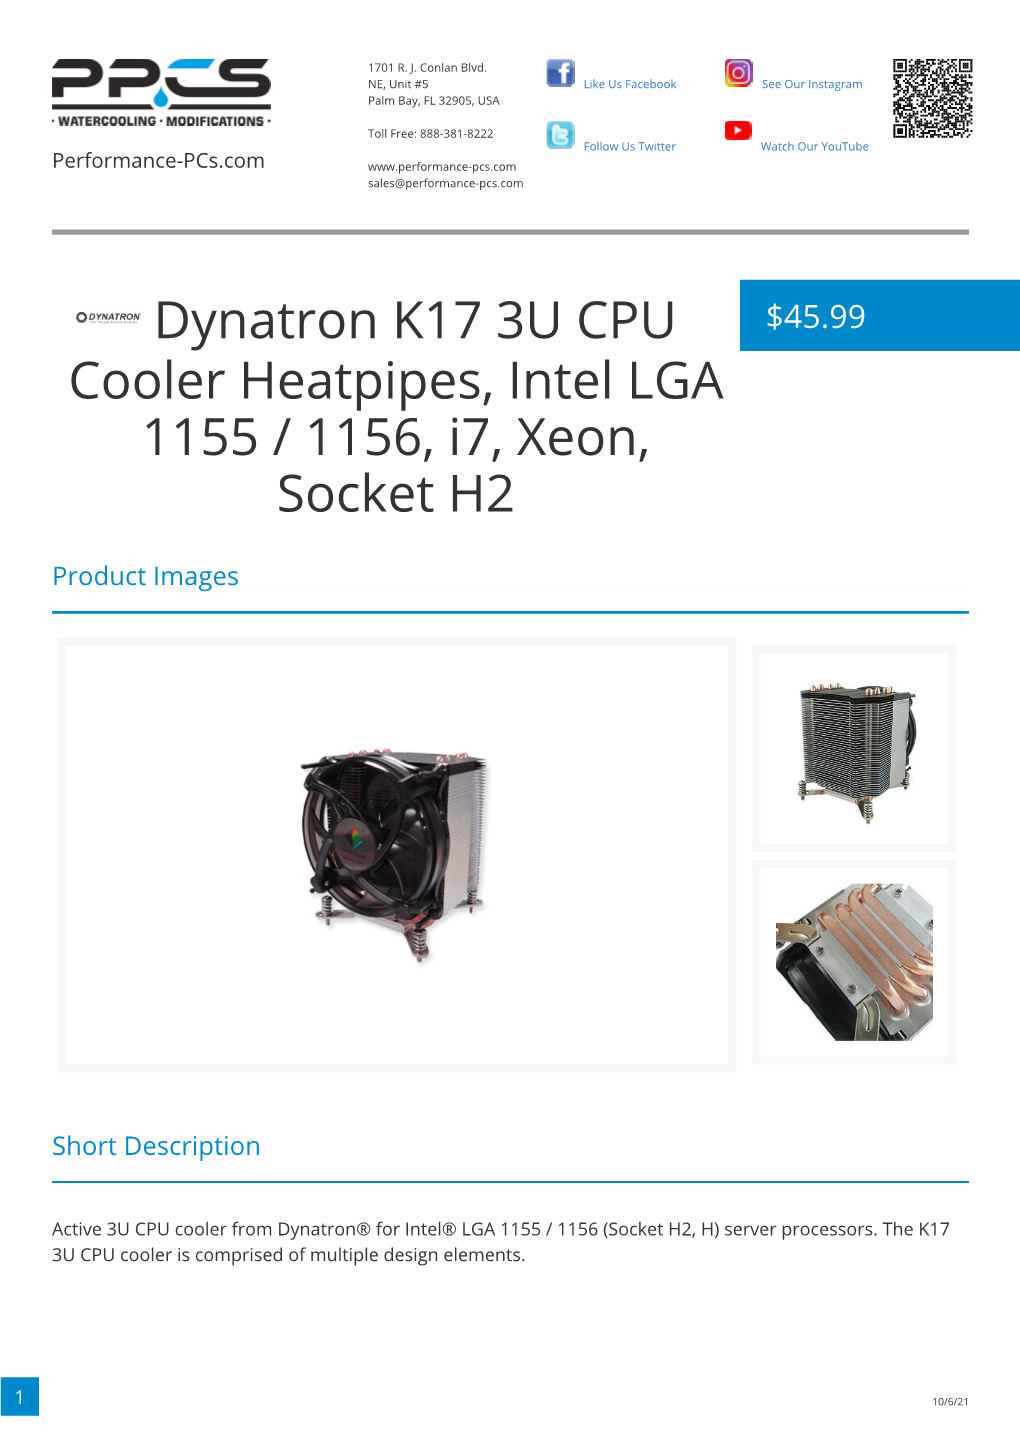 Dynatron K17 3U CPU Cooler Heatpipes, Intel LGA 1155 / 1156